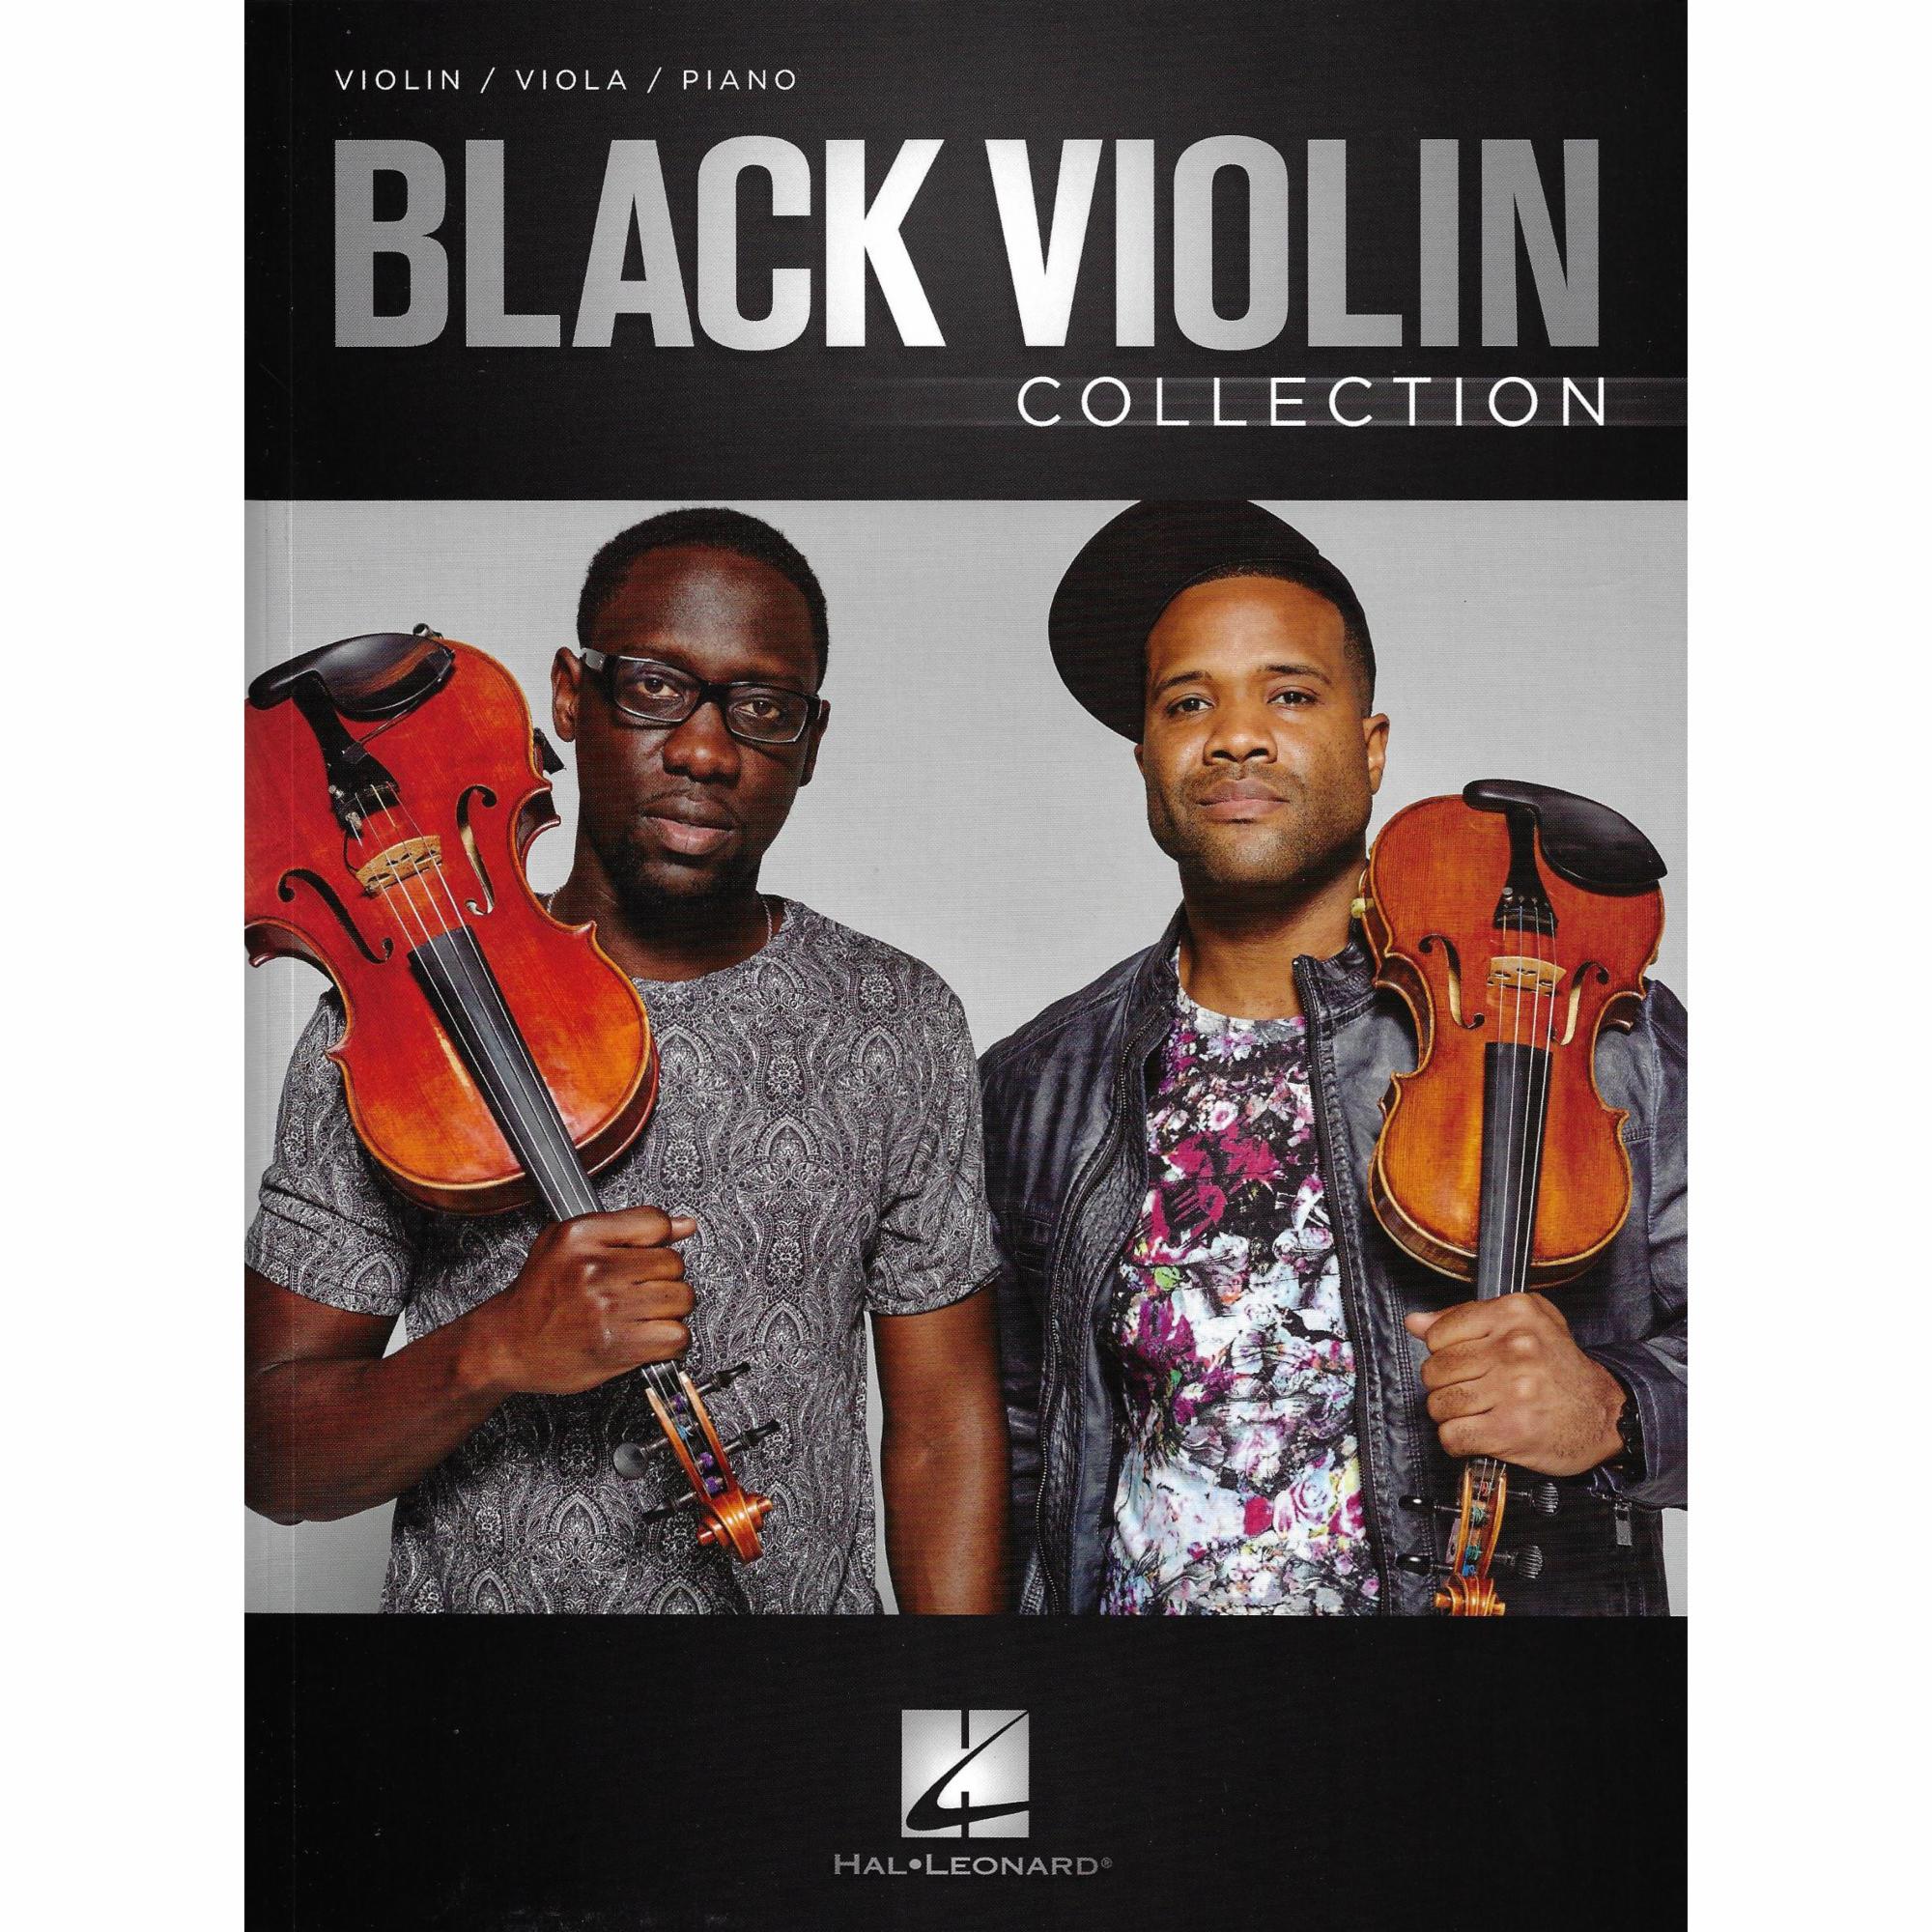 Black Violin Collection for Violin, Viola, and Piano